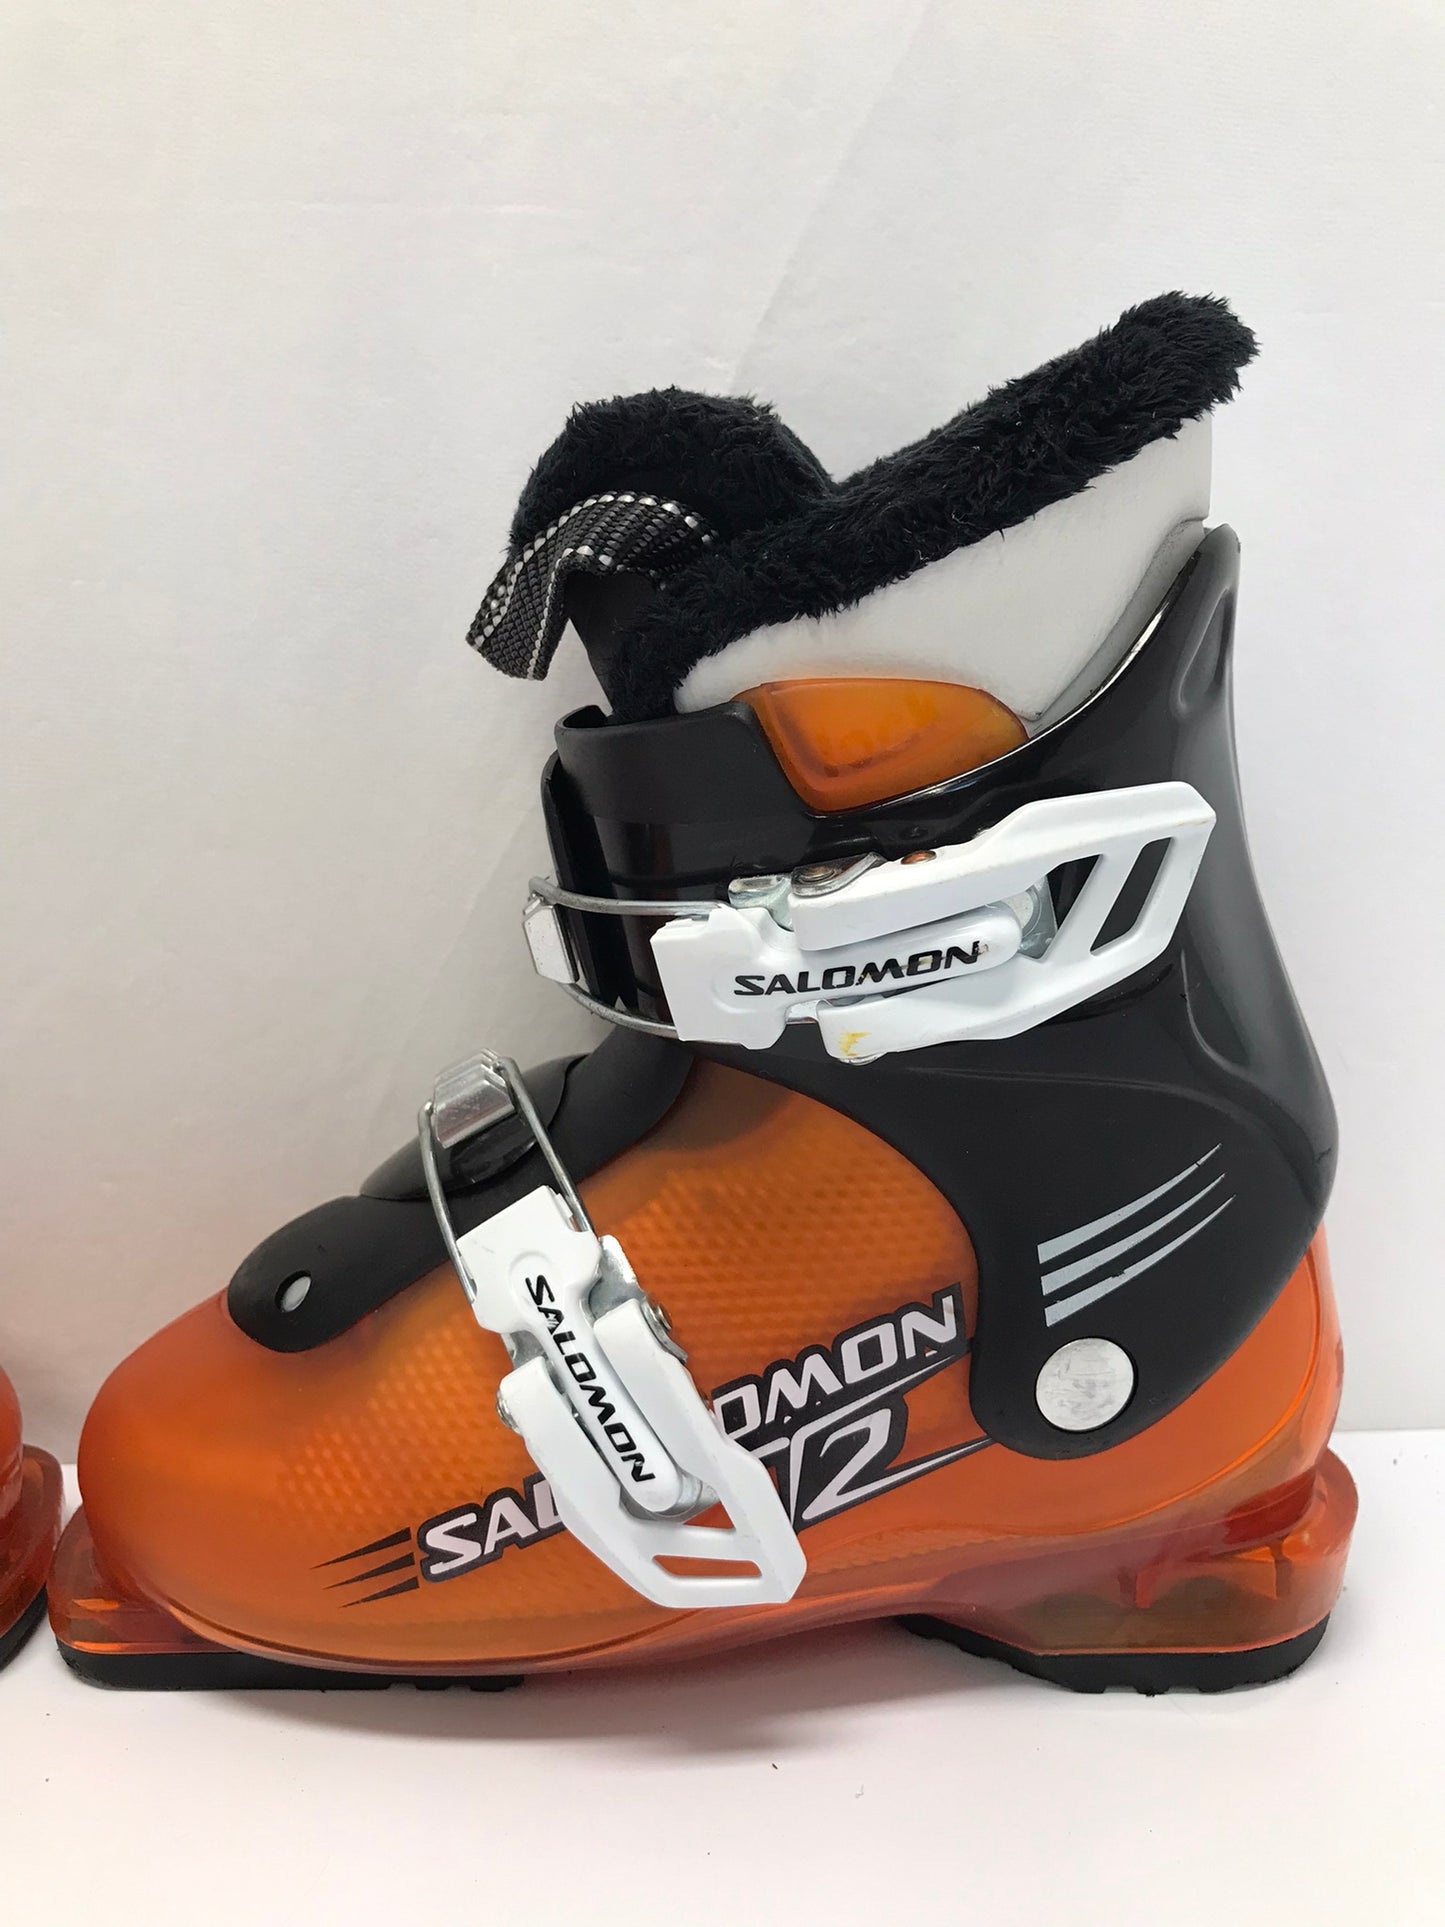 Ski Boots Mondo Size 19.0 Child Size 13.5 240 mm  Salomon Orange and Black As New